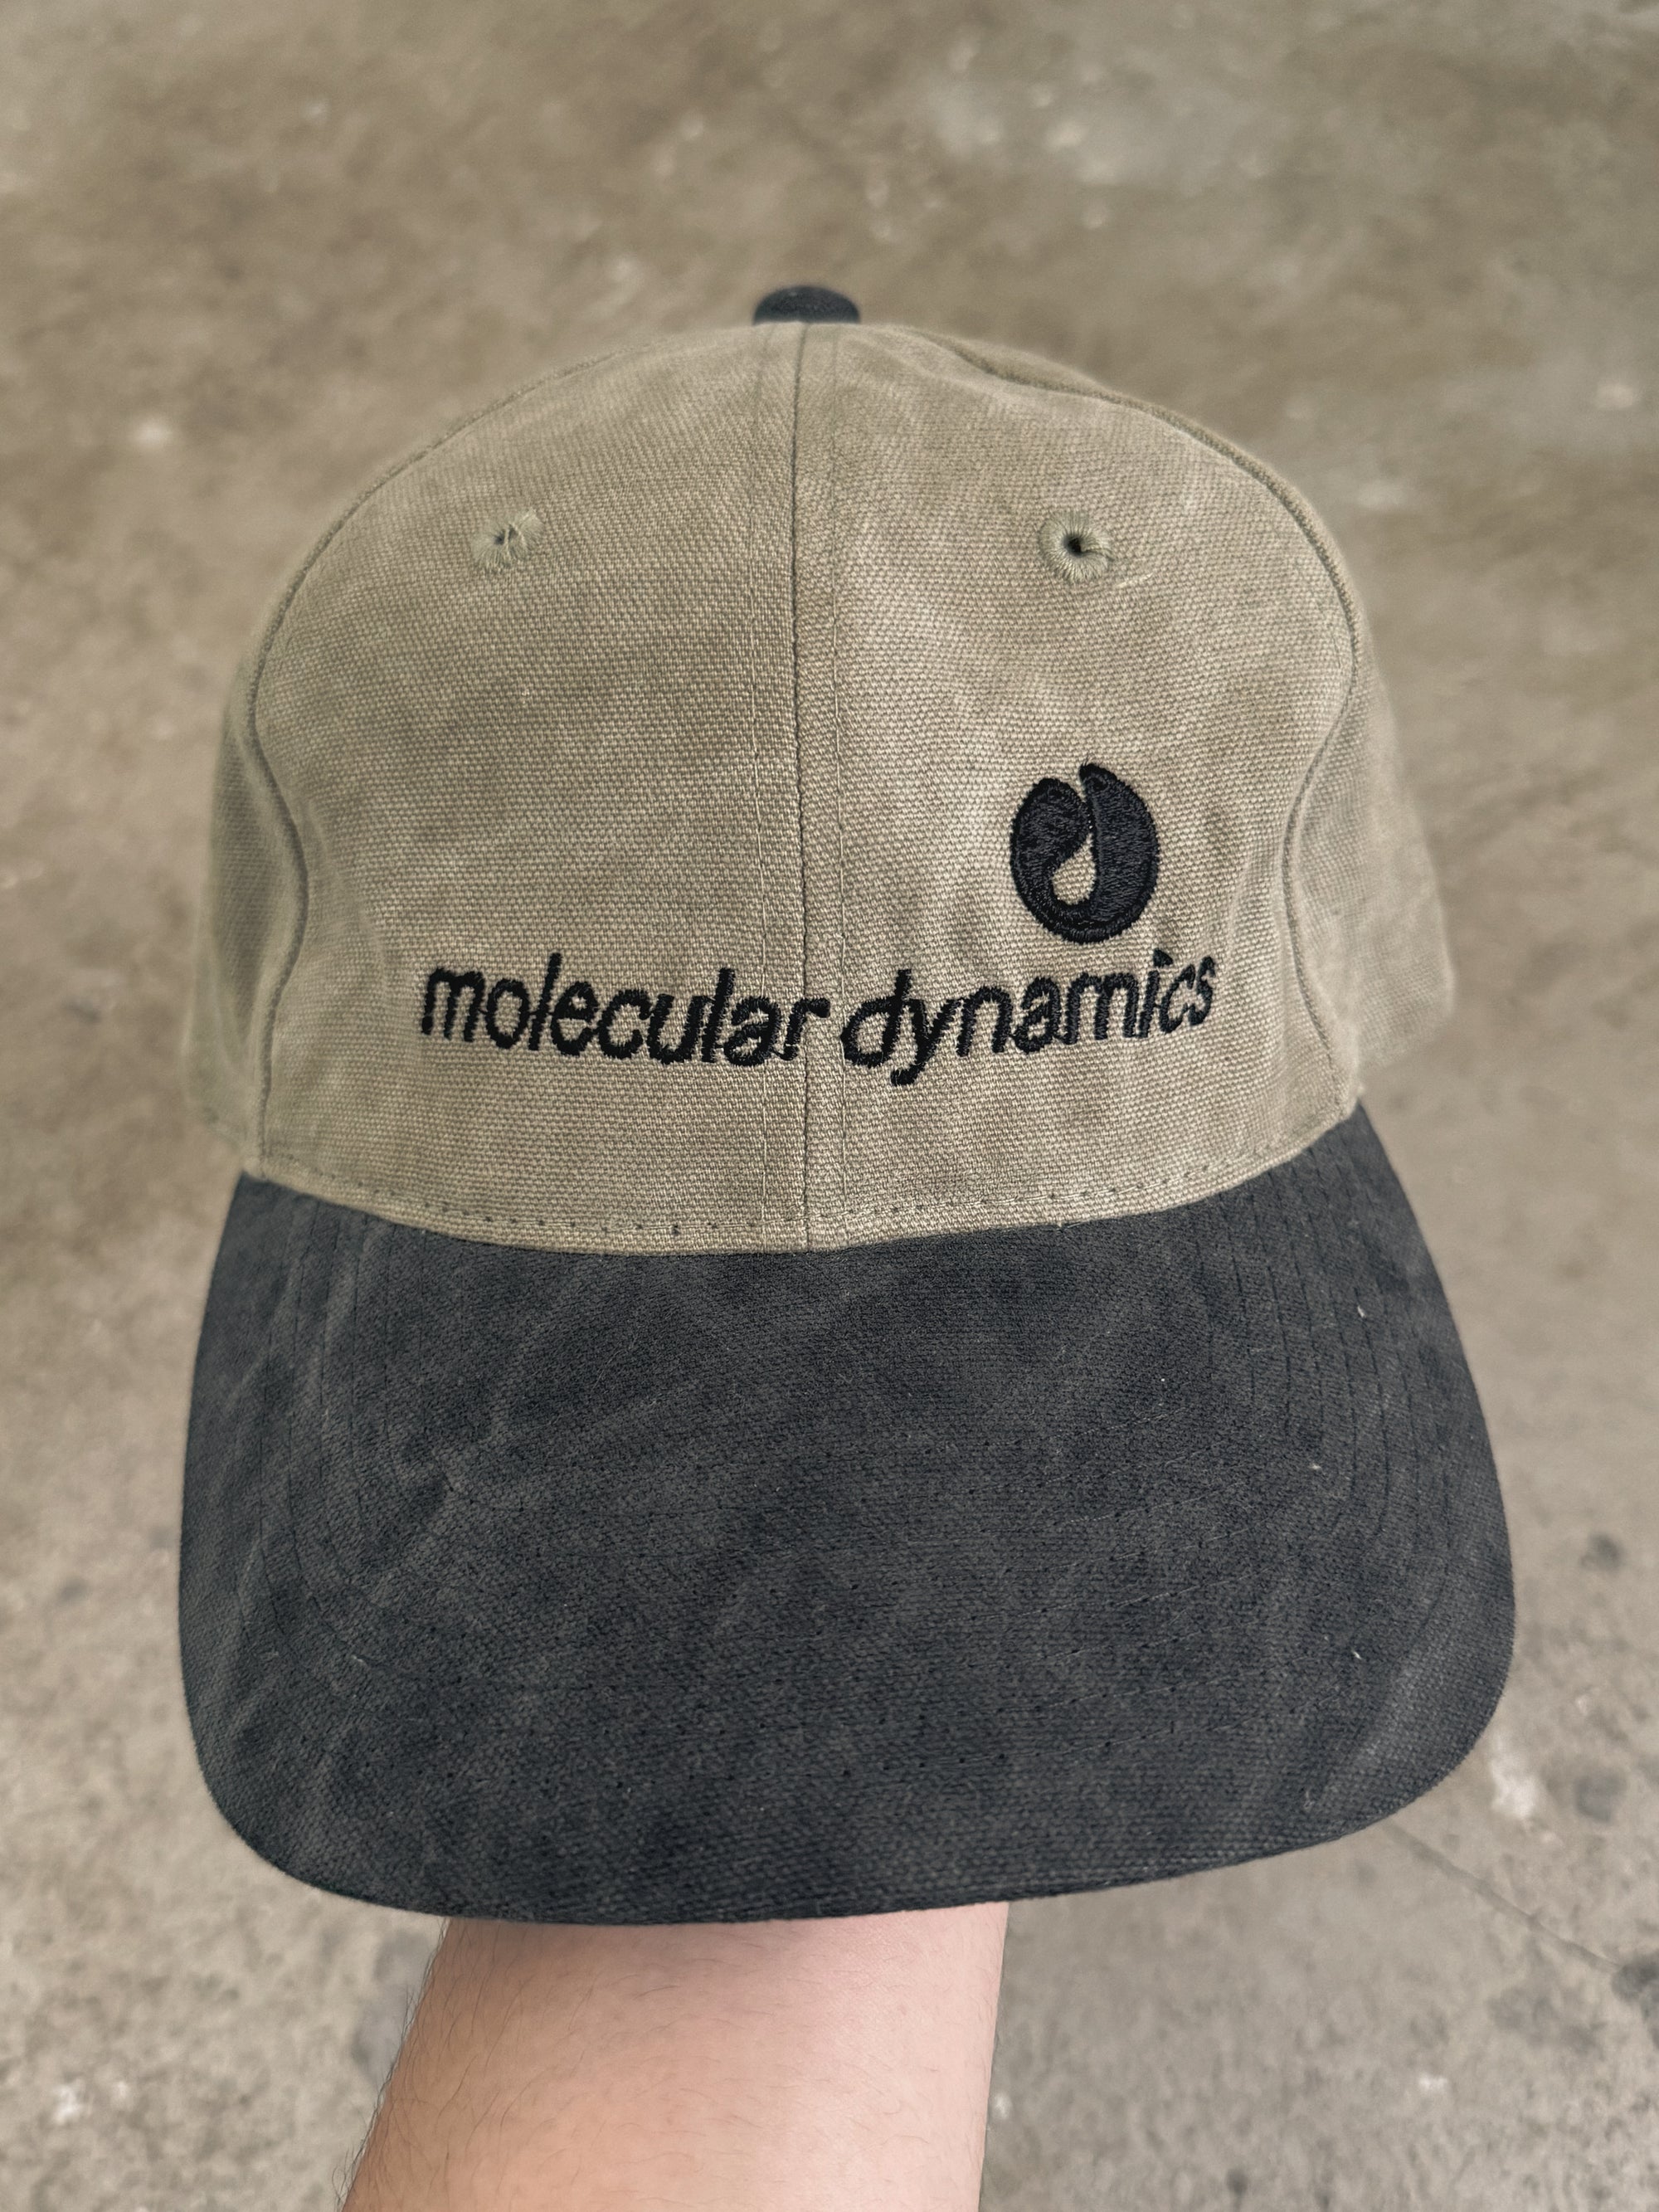 2000s "Molecular Dynamics" Hat